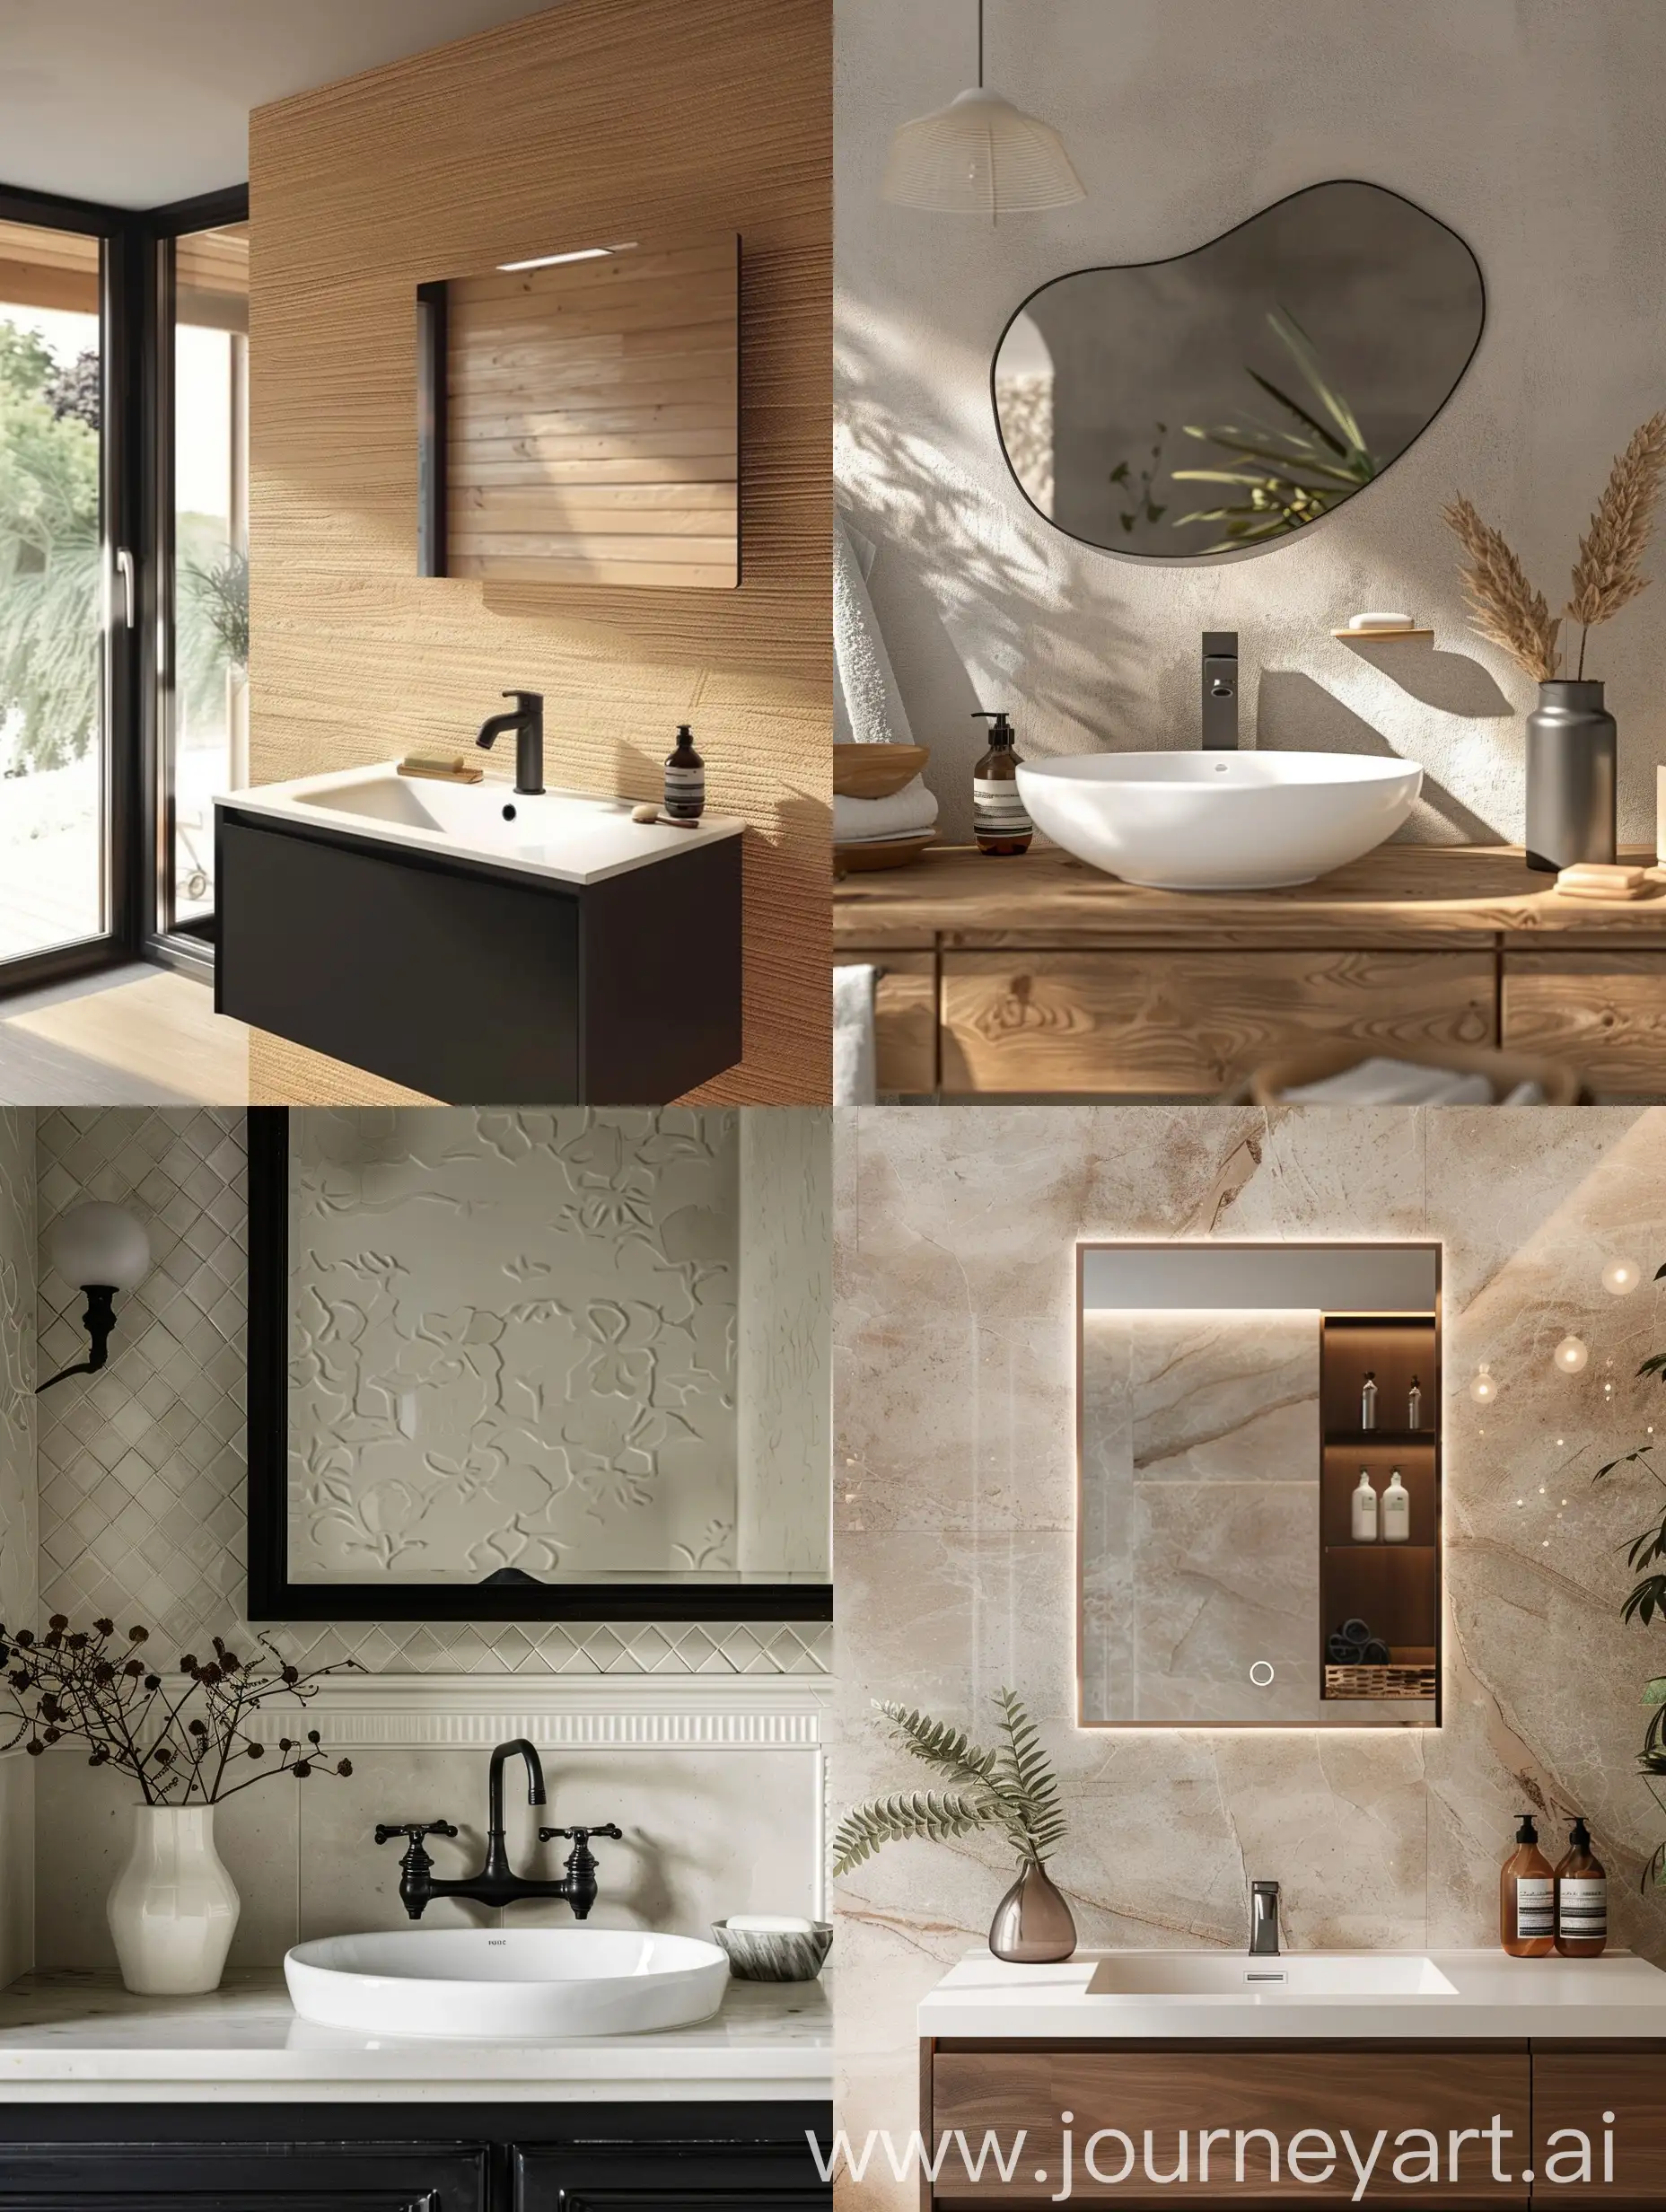 Aesthetic-Bathroom-Wall-with-Mirror-Modern-Interior-Design-Inspiration